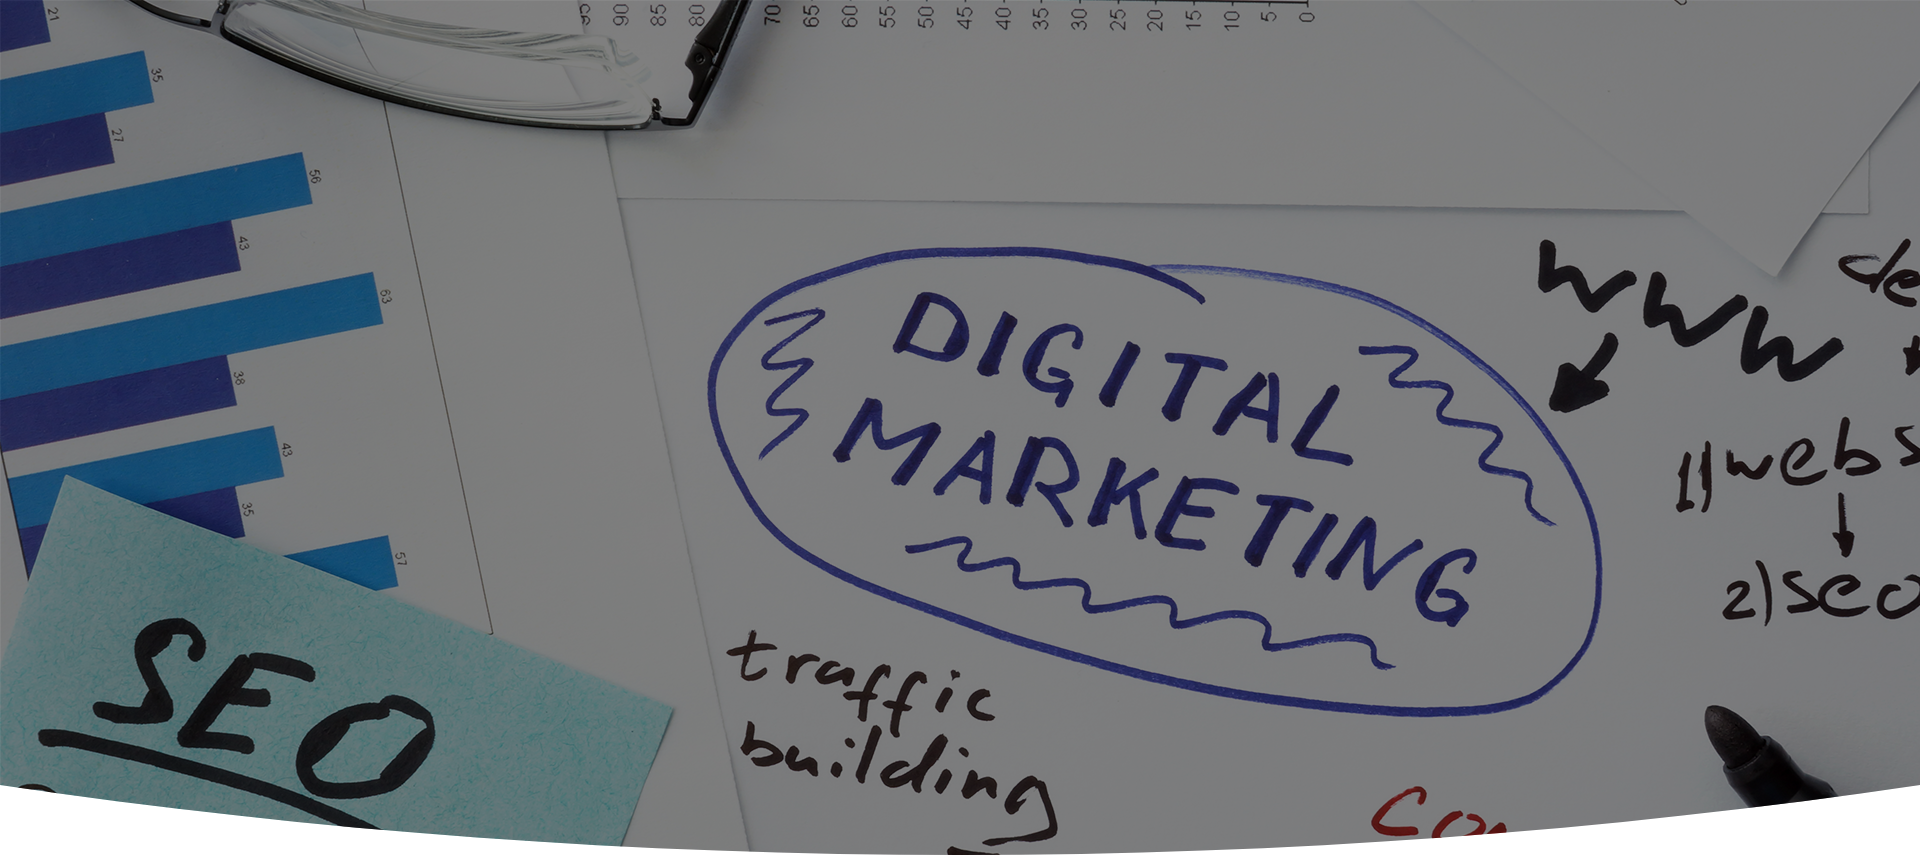 Digital Marketing Agency Graphic